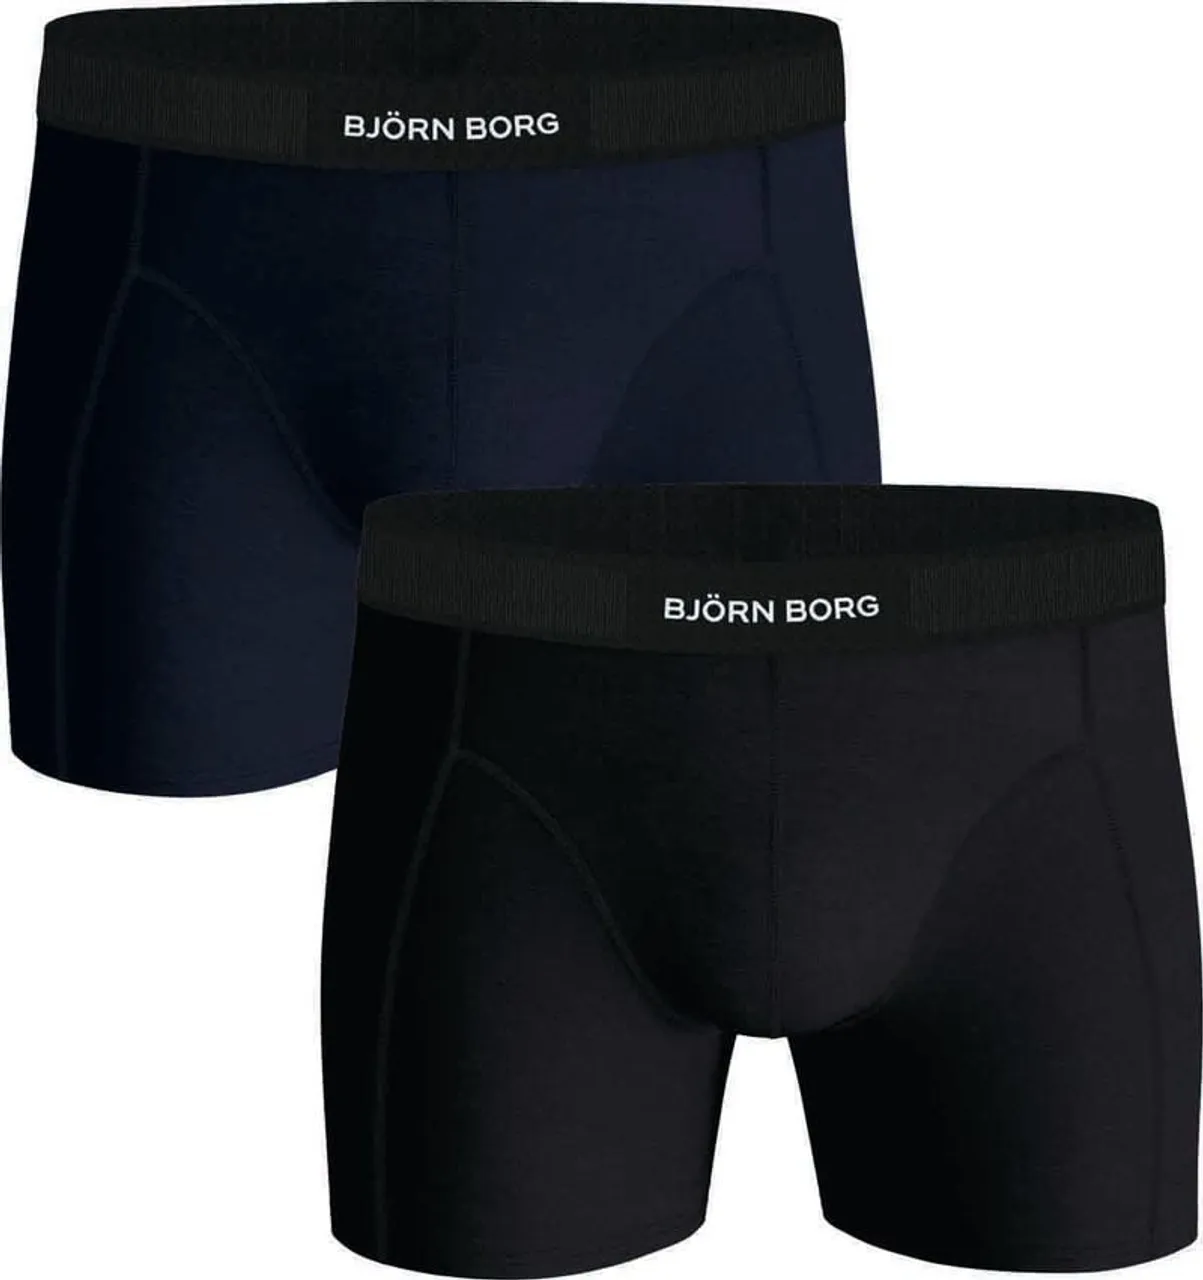 Bjorn Borg Boxers 2 Pack Black/Blue